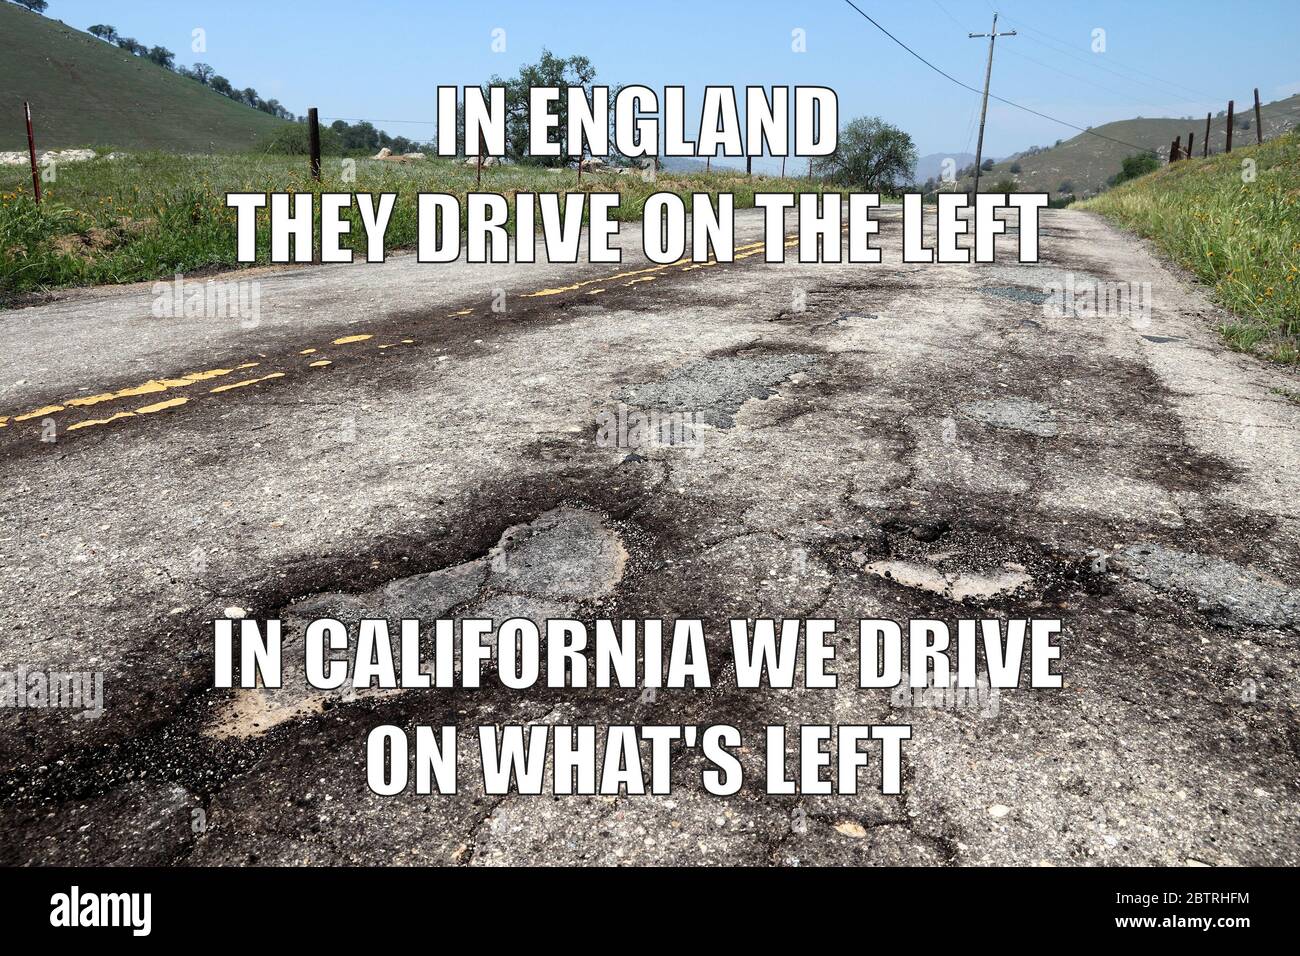 california-road-quality-funny-meme-for-social-media-sharing-road-potholes-and-maintenance-joke-2BTRHFM.jpg